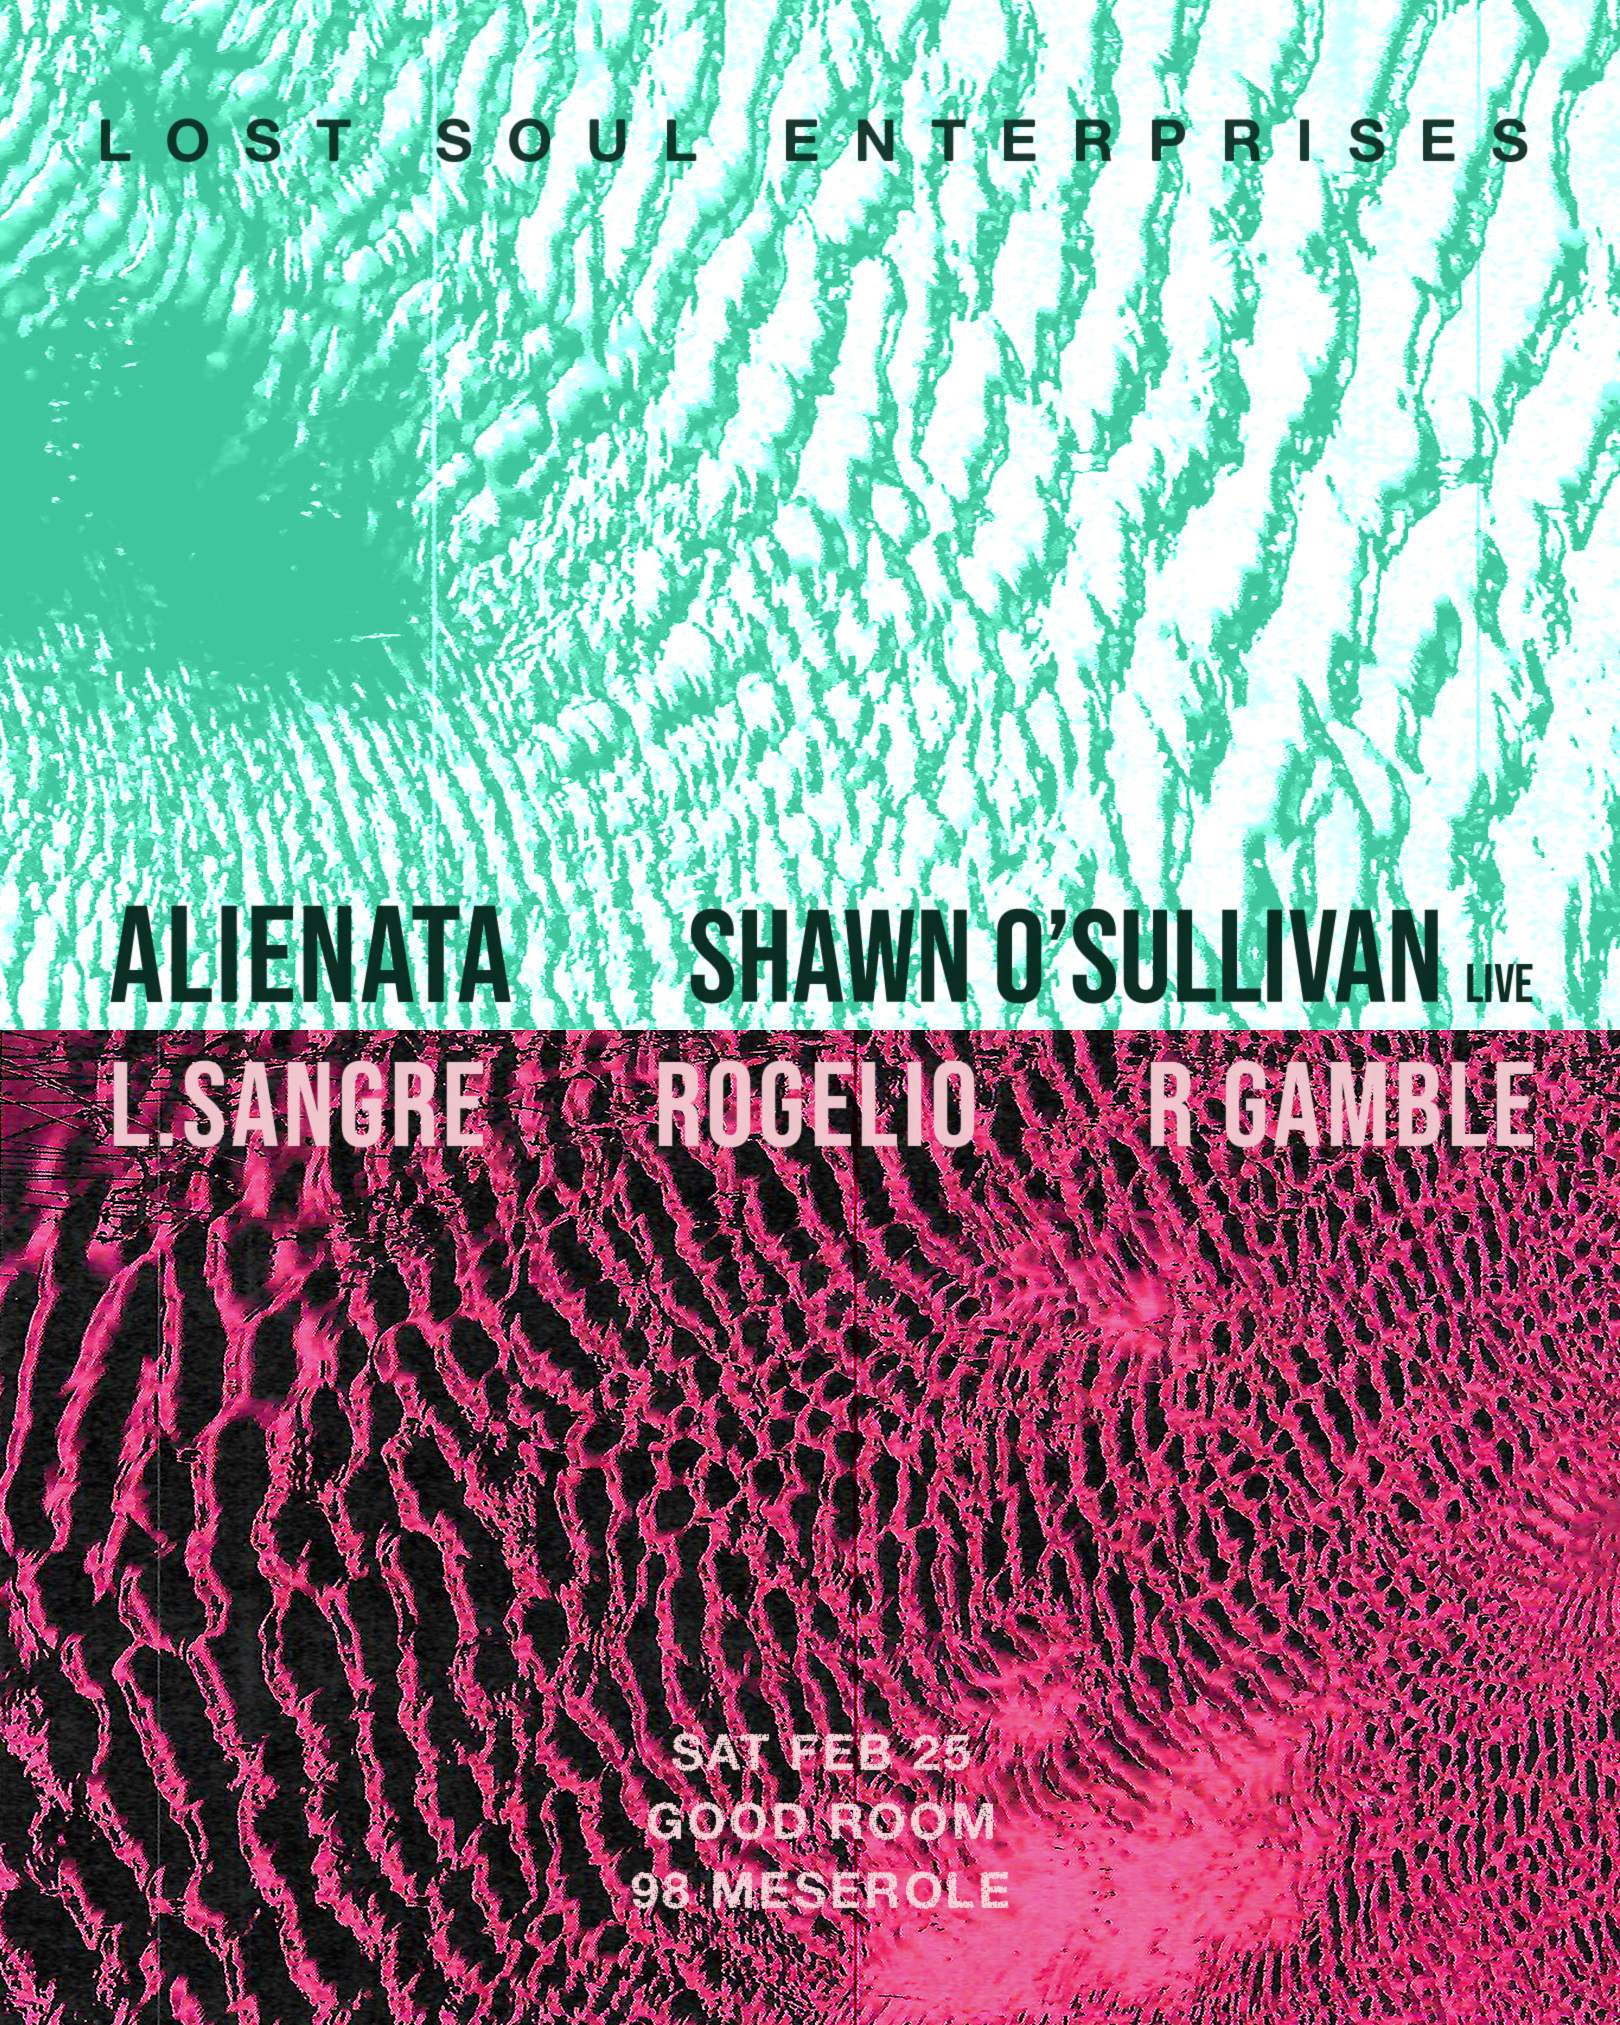 Lost Soul Enterprises ft Alienata, Shawn O'Sullivan (live), L.Sangre, Rogelio, R Gamble - フライヤー表